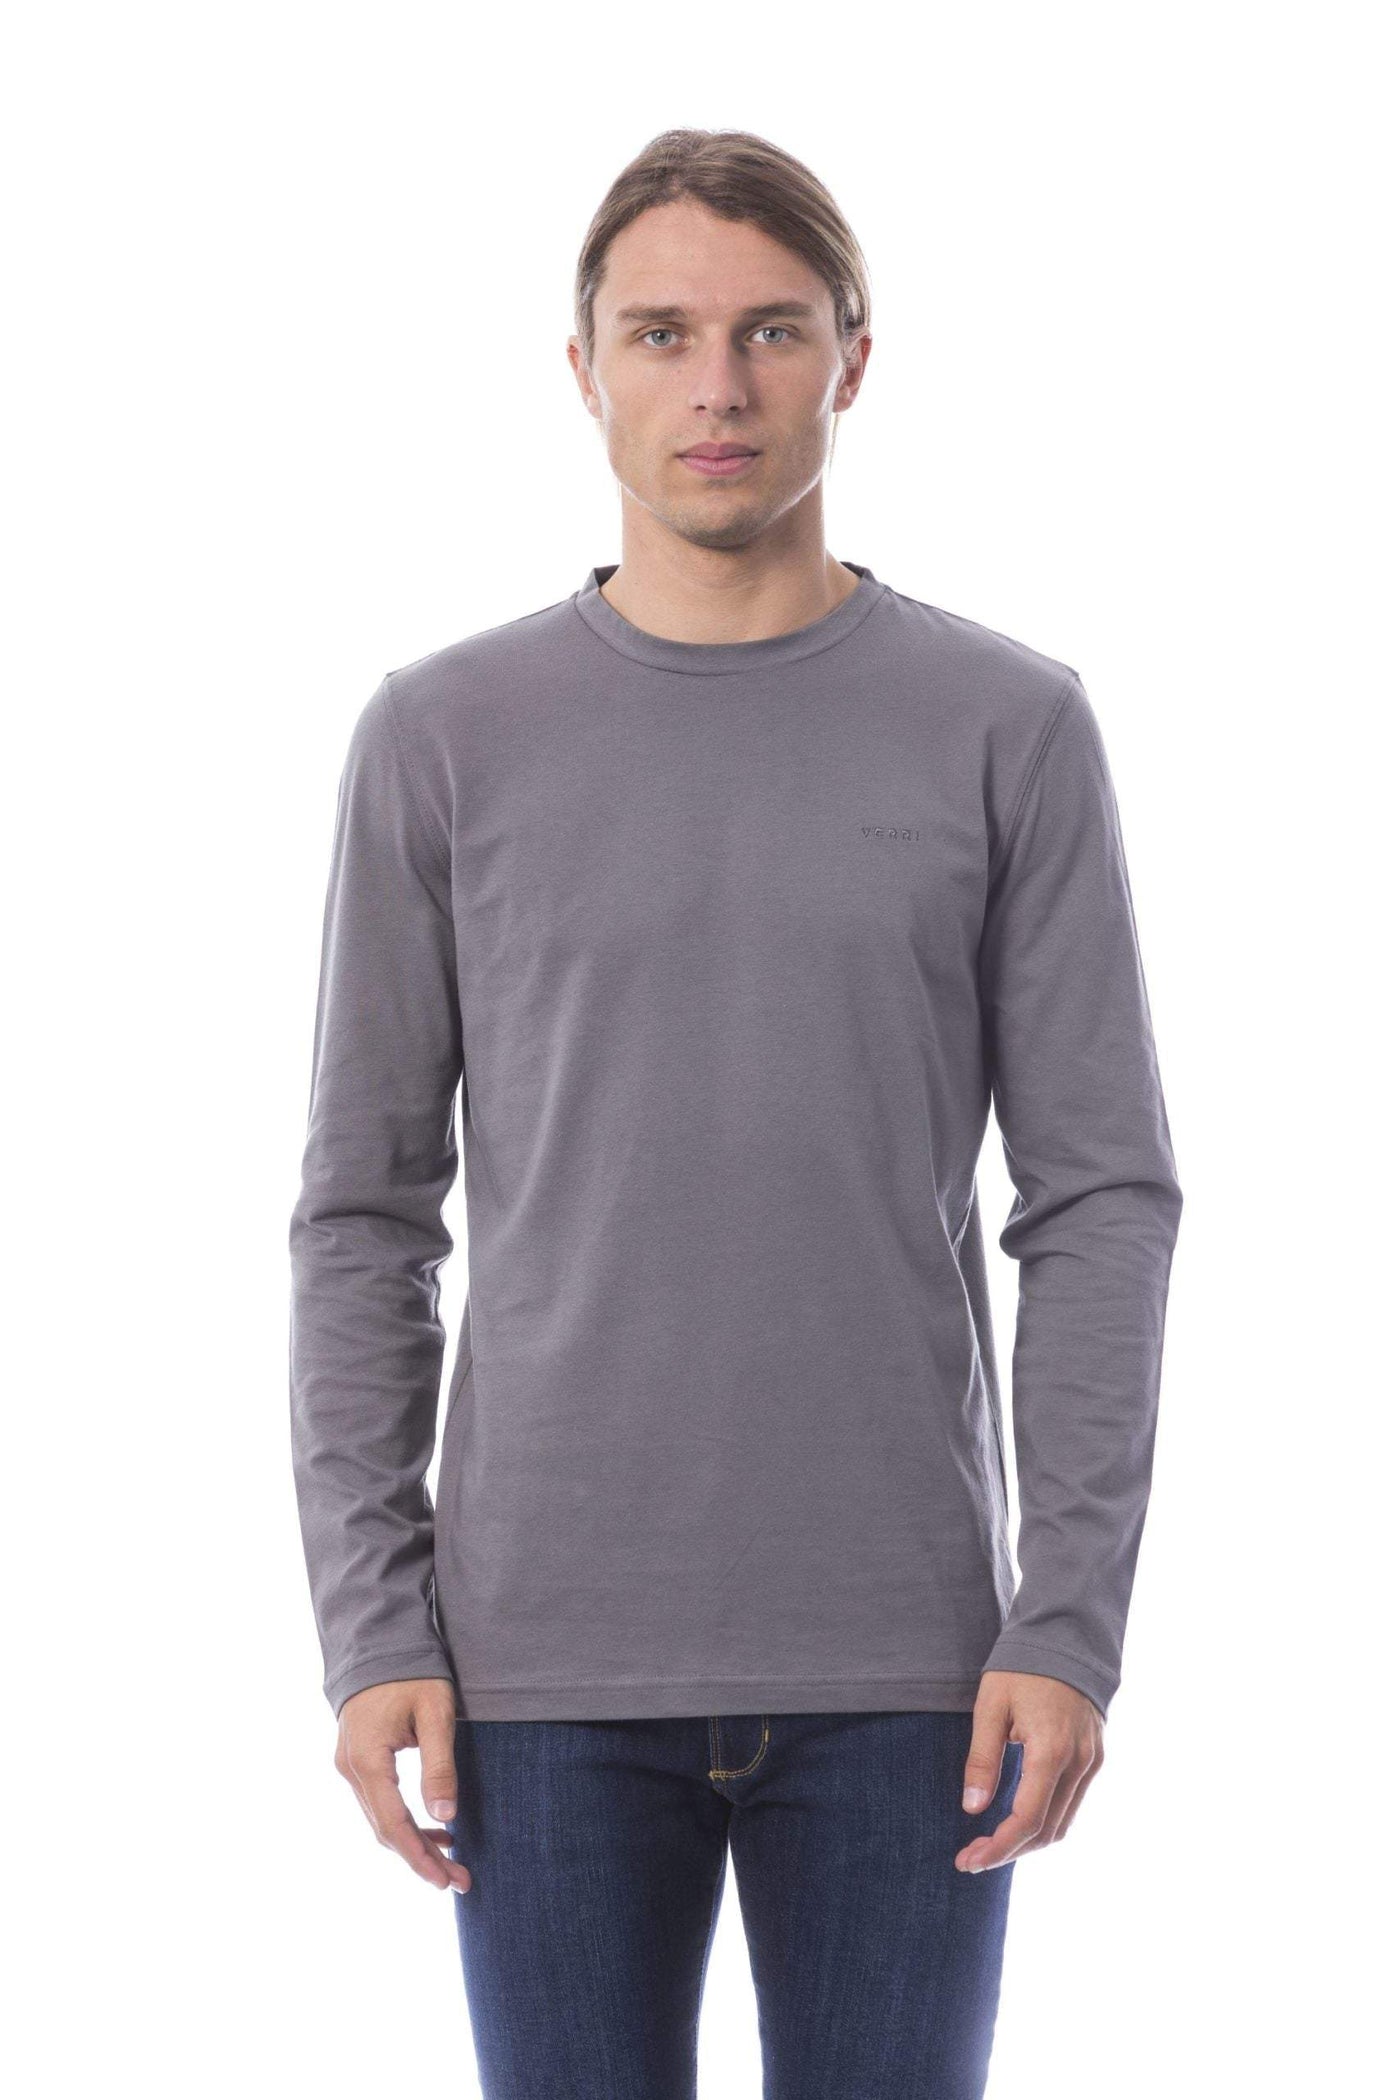 Verri Long sleeve T-shirt #men, feed-agegroup-adult, feed-color-grey, feed-gender-male, Gray, T-shirts - Men - Clothing, Verri, XL at SEYMAYKA